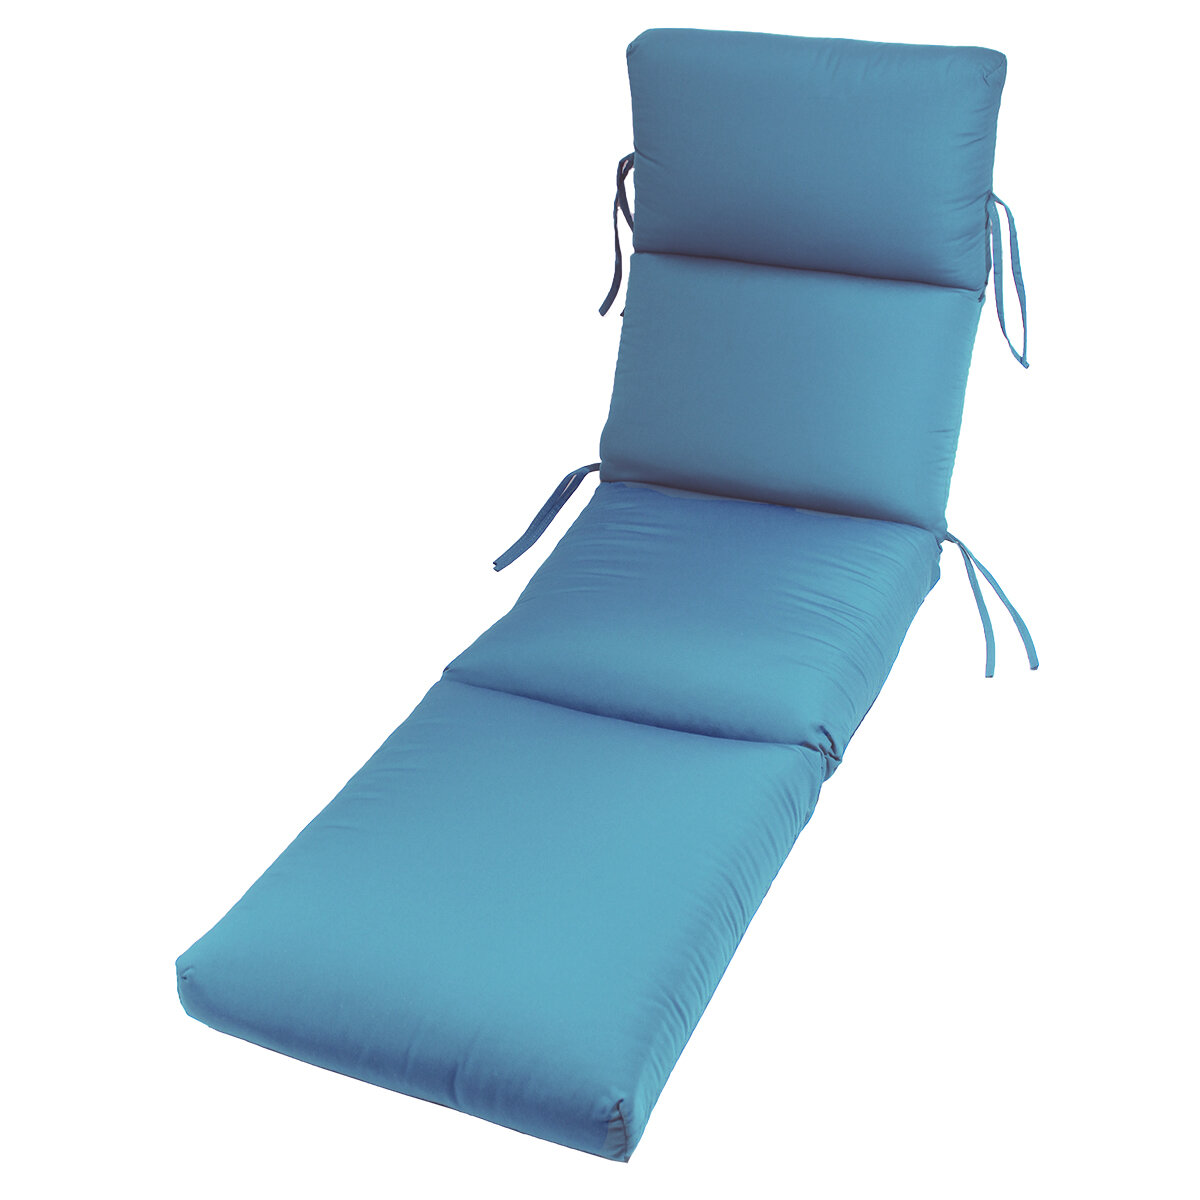 Comfort Classics Inc. Outdoor Sunbrella Chaise Lounge Cushion | eBay